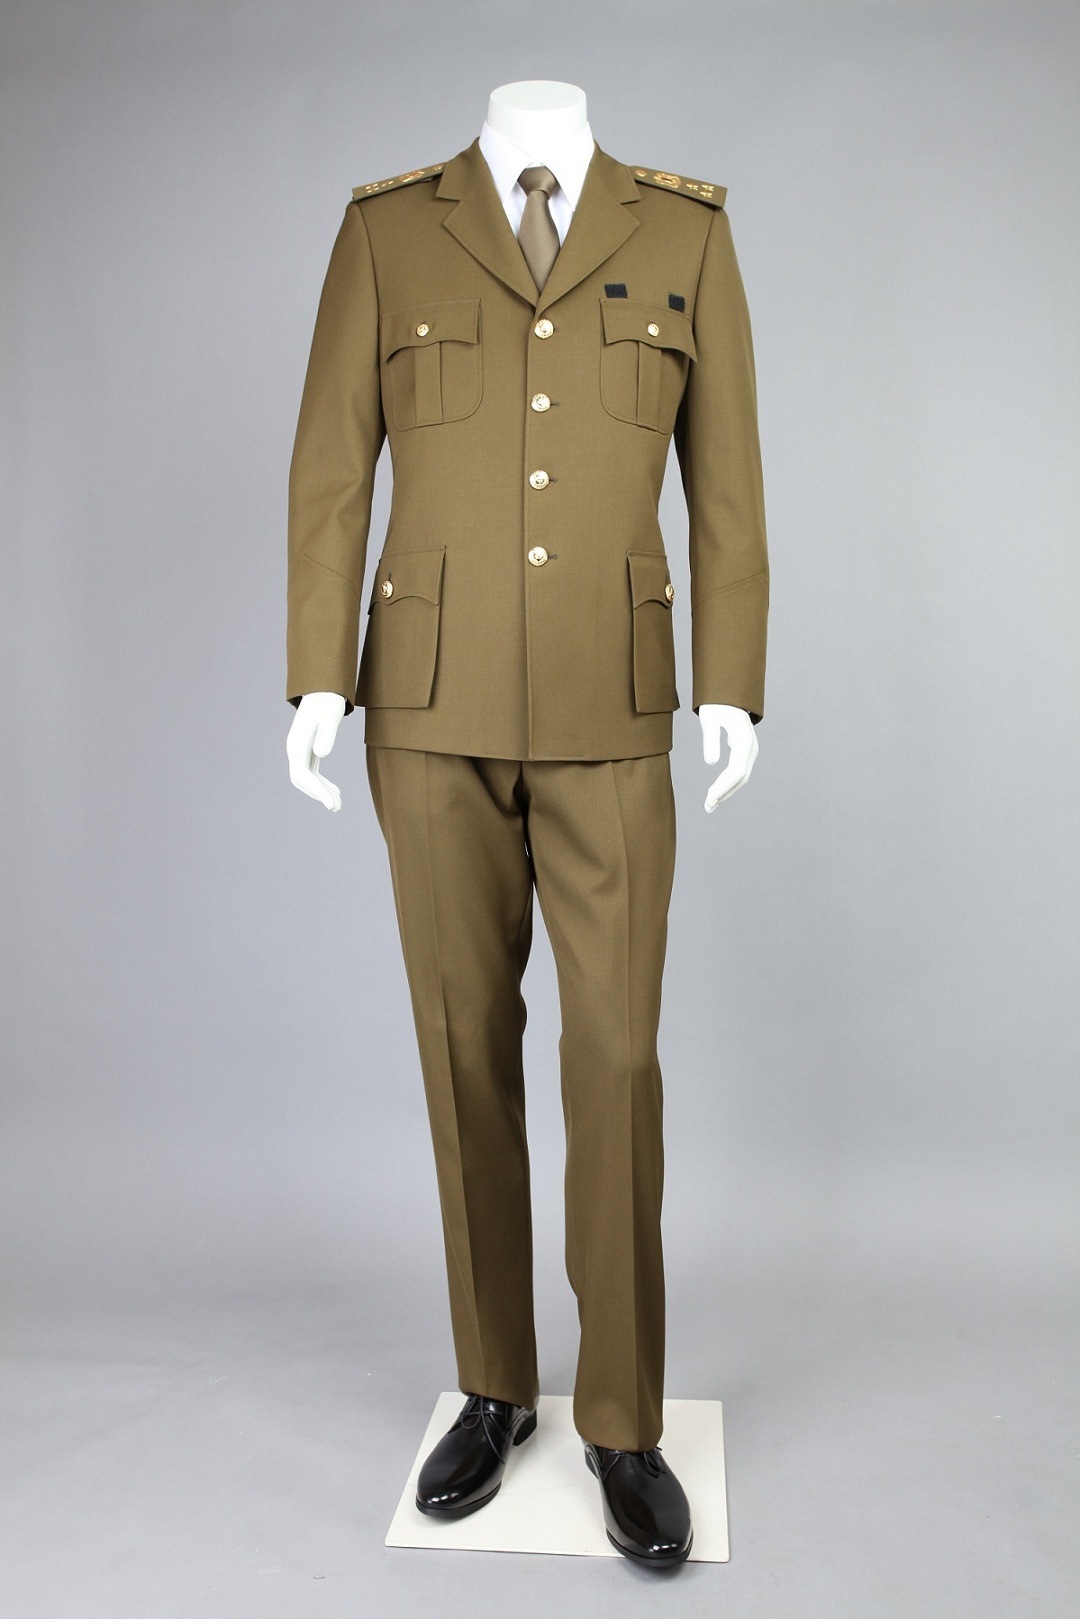 Ceremony Uniforms Military Jacket 010